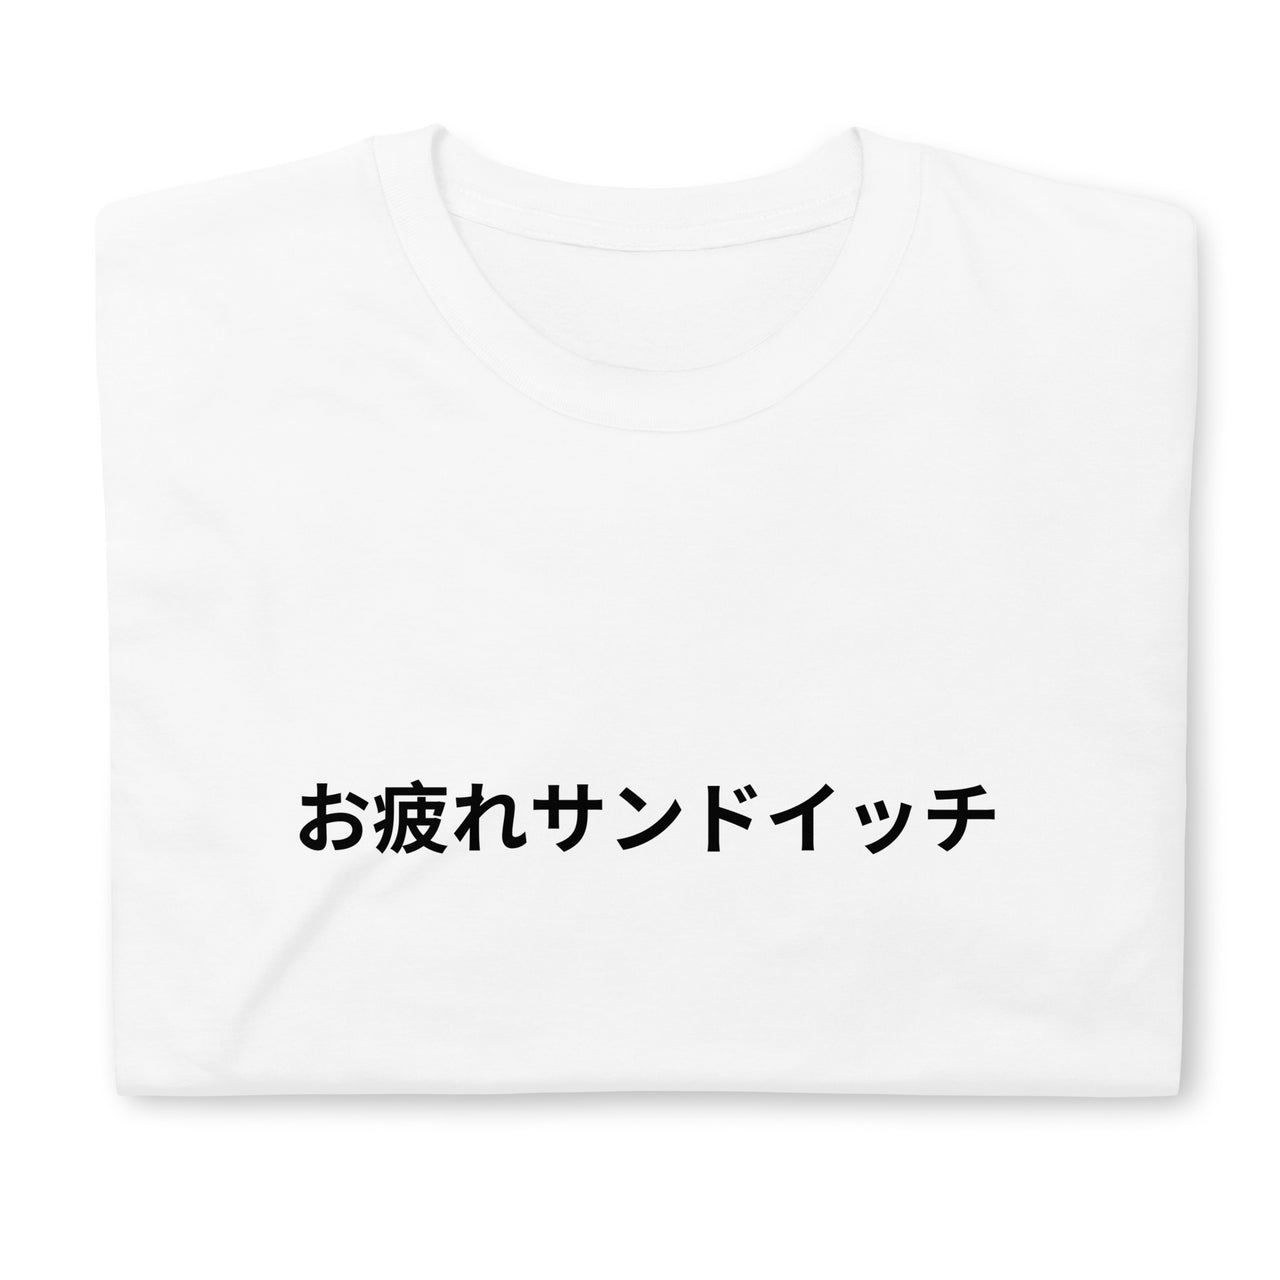 Good Work Sandwich in Japanese T-Shirt